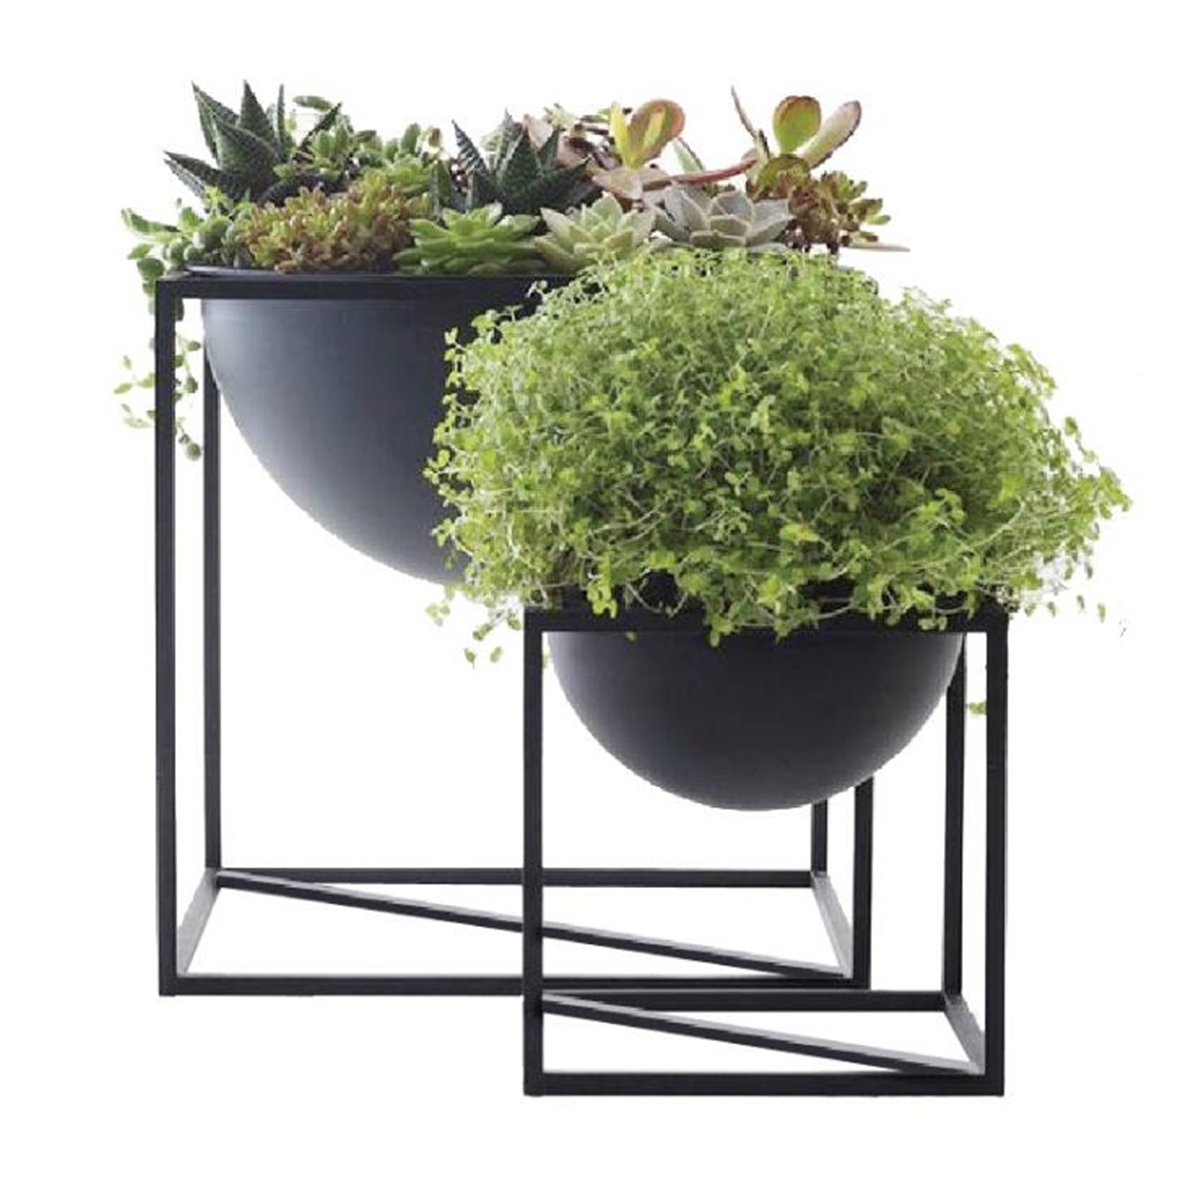 

24*24*24cm European Wrought Iron Balcony Decoration Multi-small Flower Pot Shelf With Basin